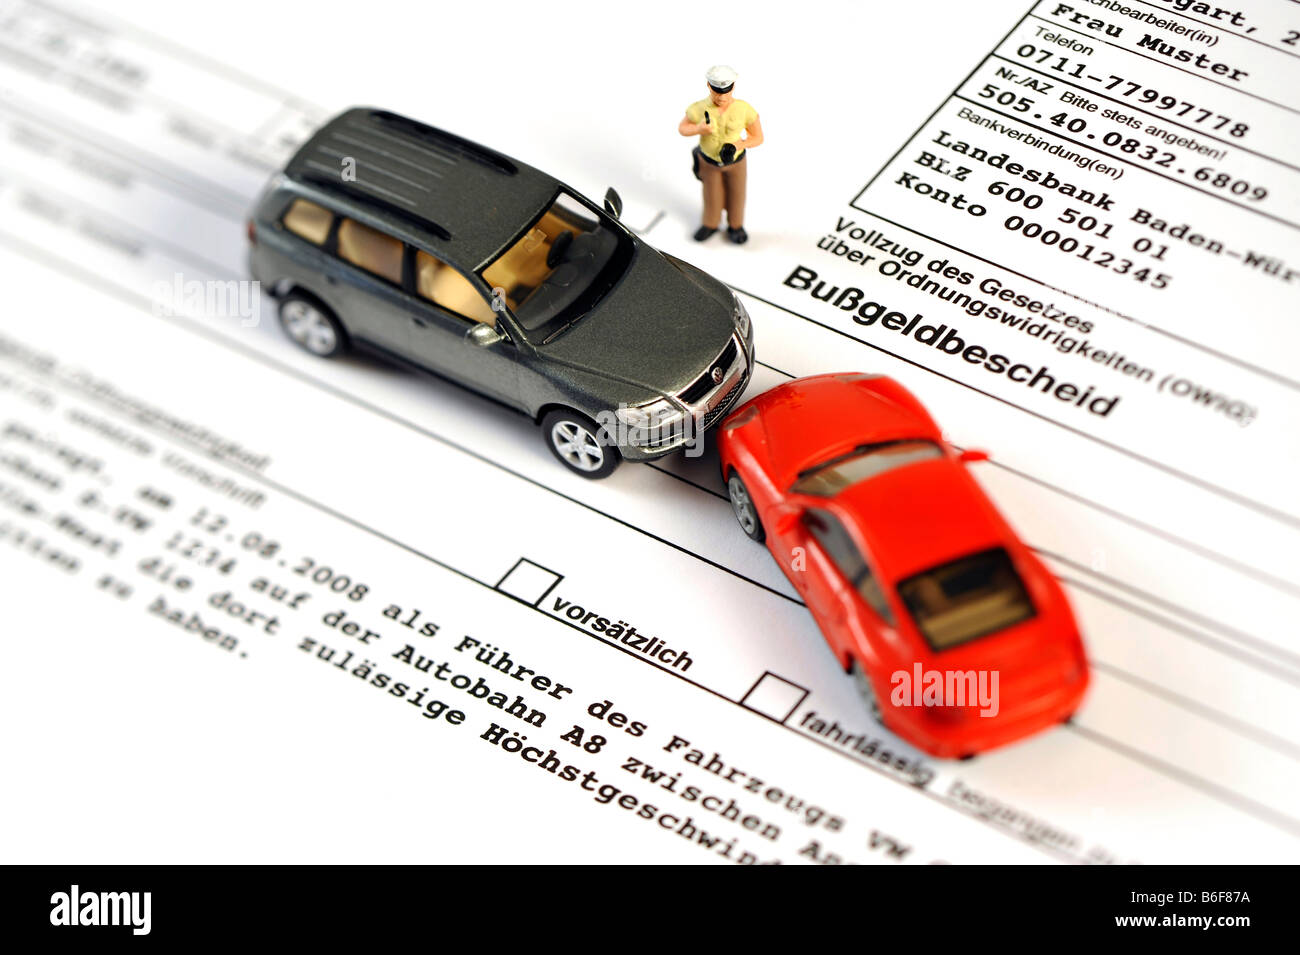 Policeman, VW Touareg and Porsche 911 cars, as miniature figures on a traffic violation ticket Stock Photo